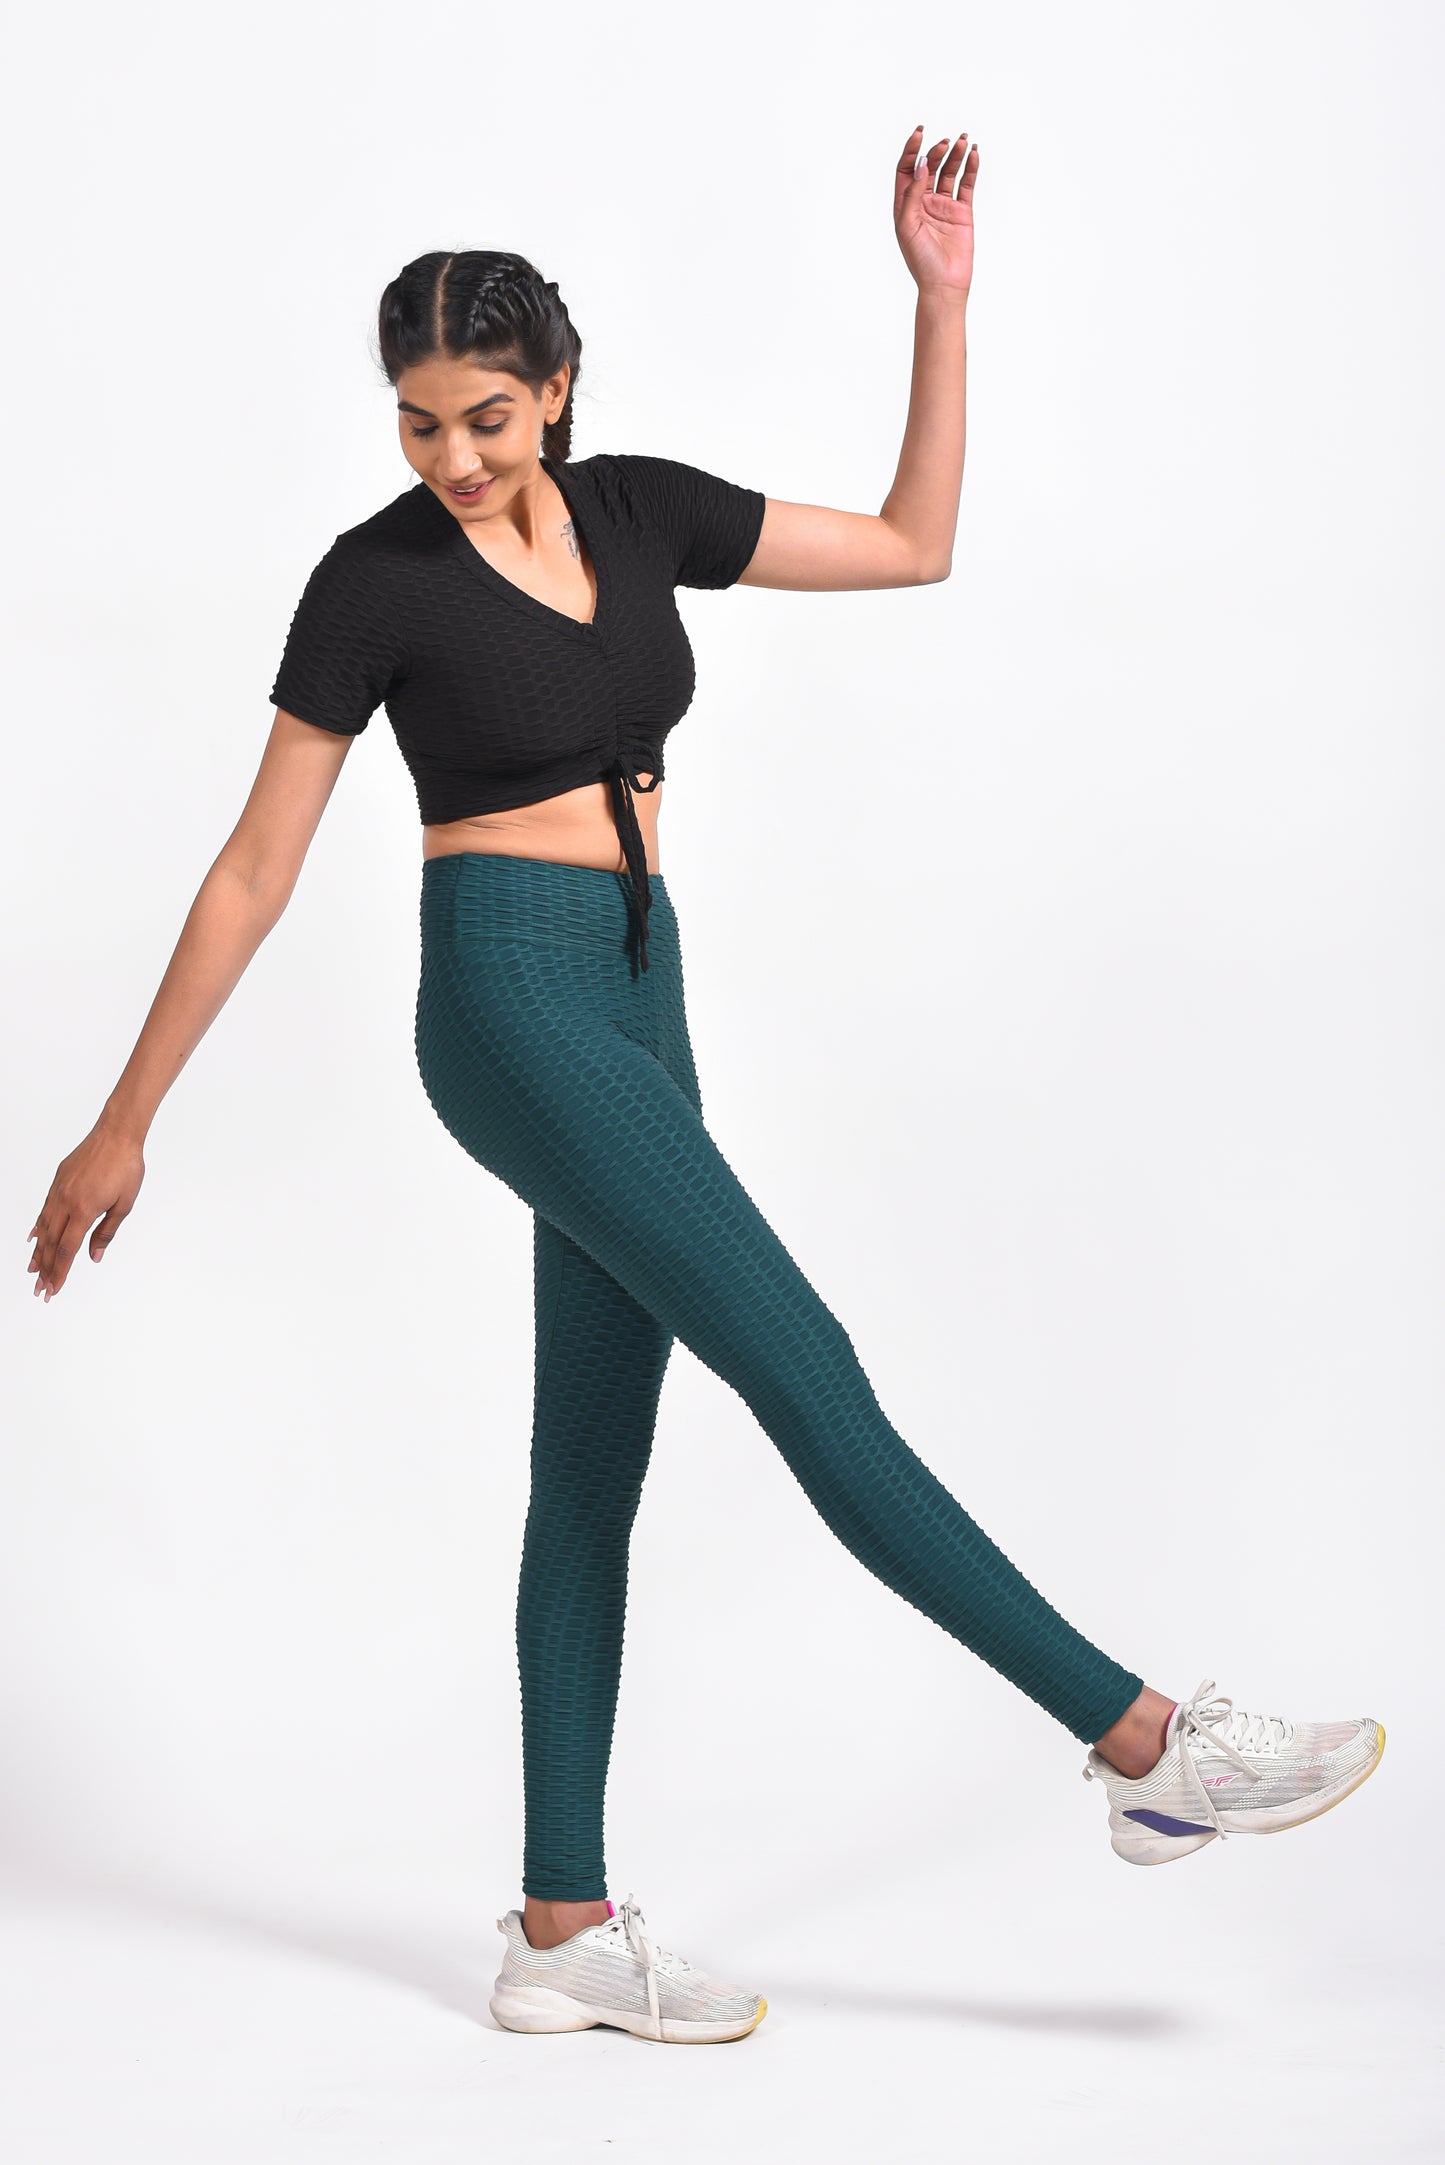 Tik Tok Women Yoga Pants Anti-Cellulite Push Up Ruched Butt Booty Leggings  Gym | eBay